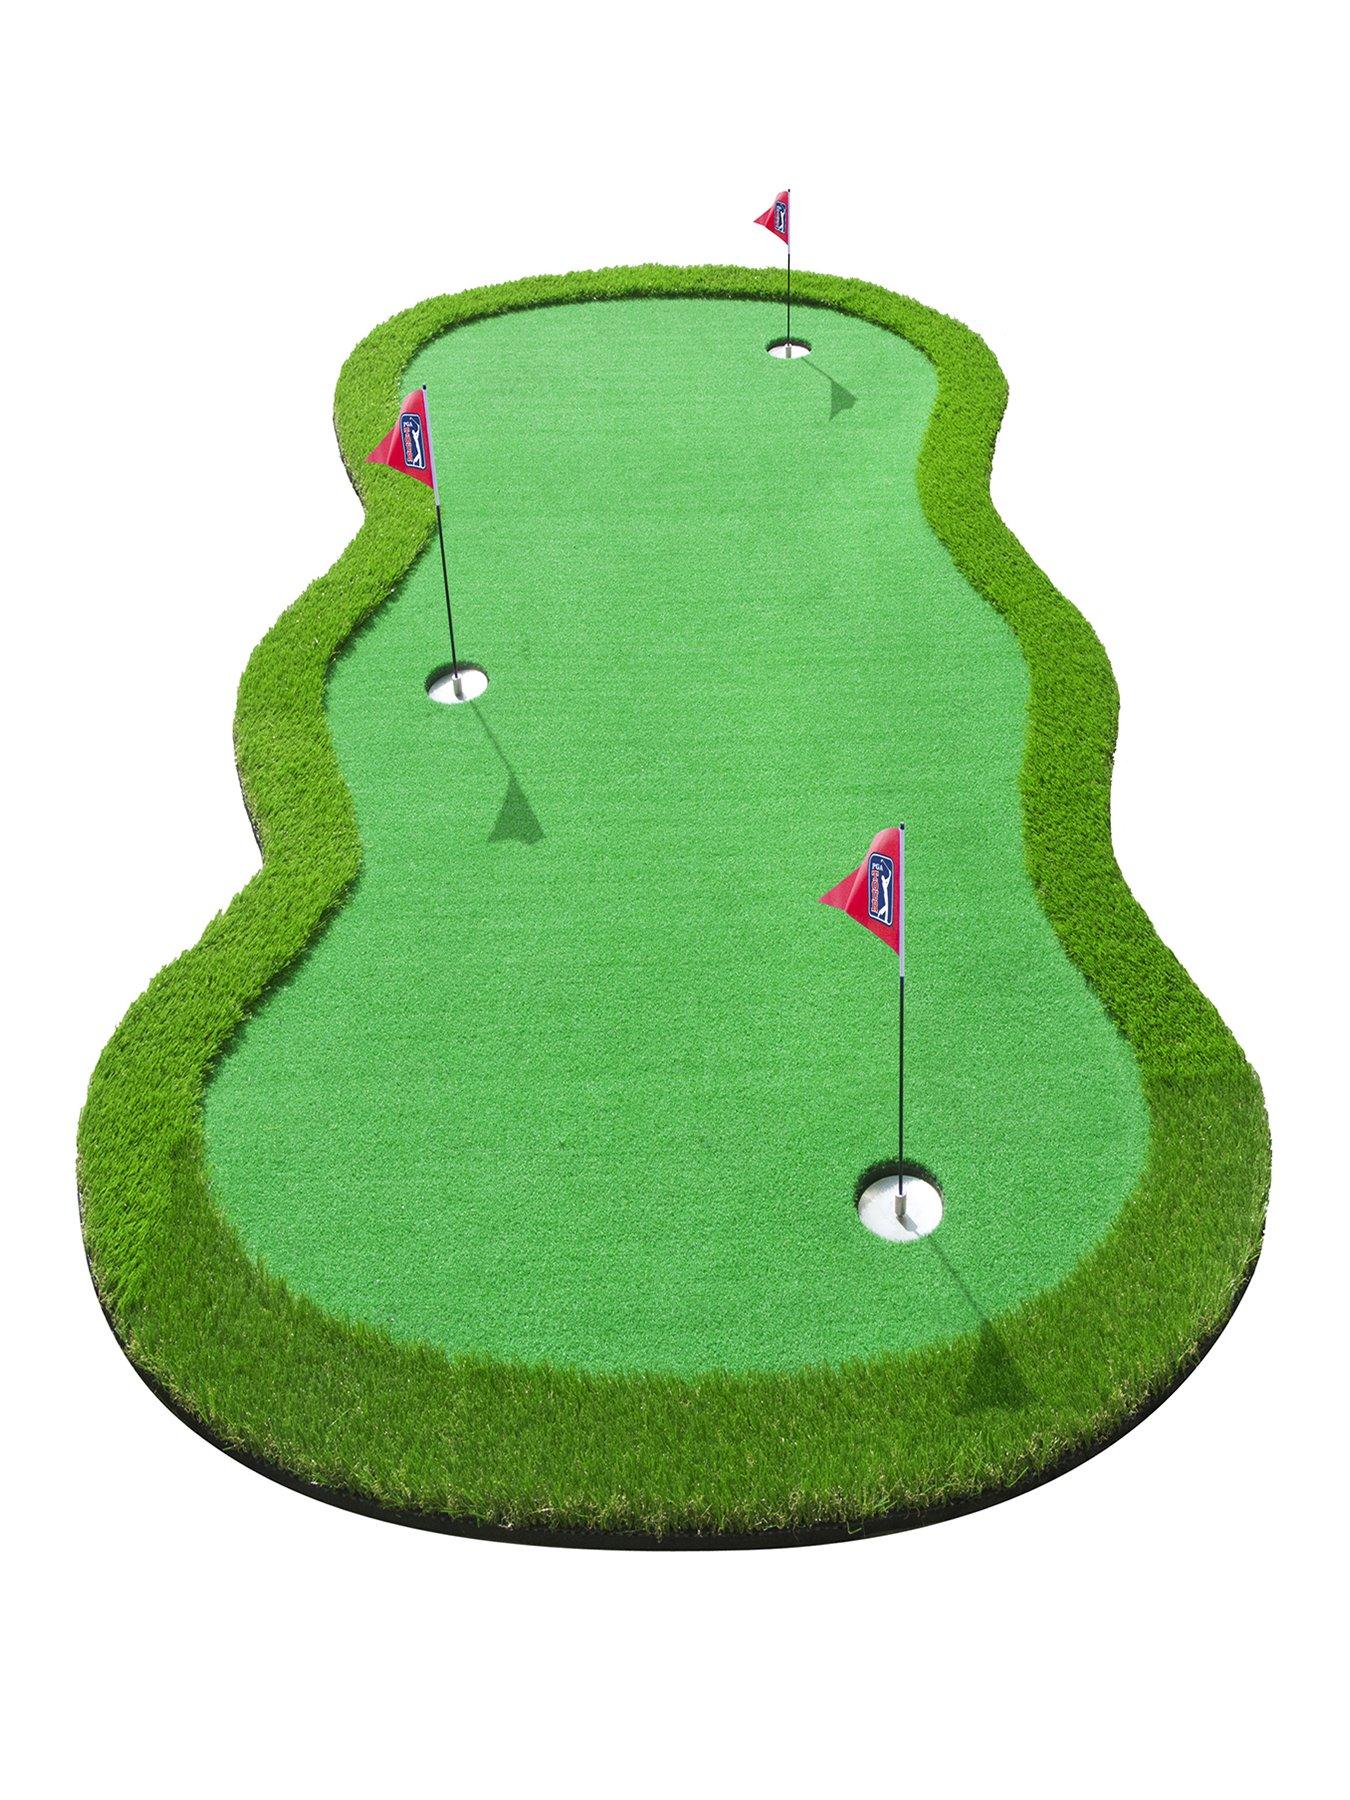 Pure2Improve Putting Mat 3.0 - Discount Golf Club Prices & Golf